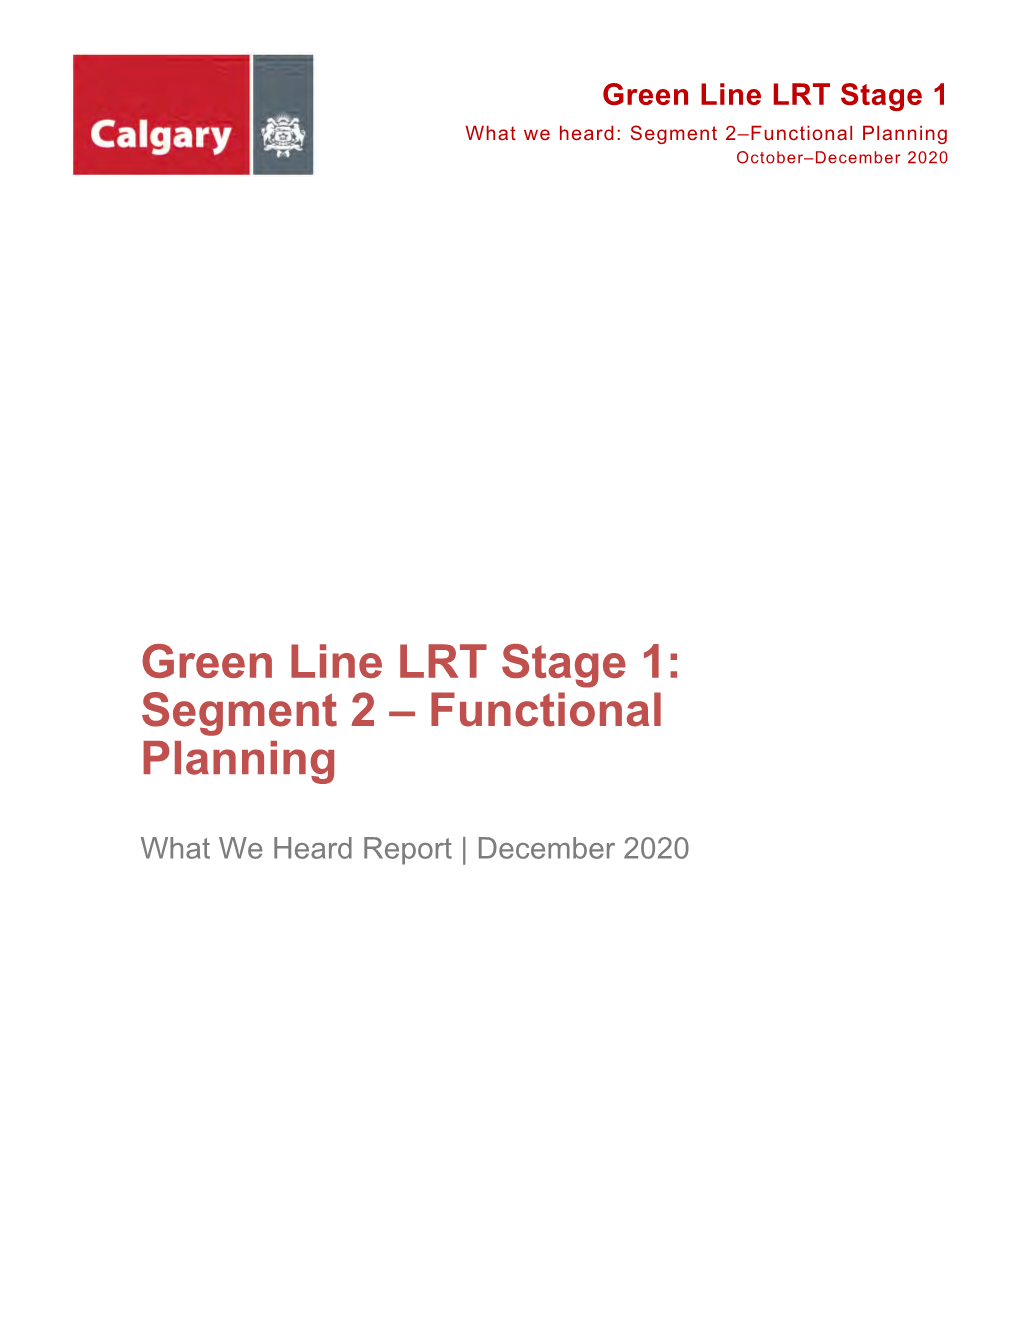 Green Line LRT Stage 1: Segment 2 – Functional Planning